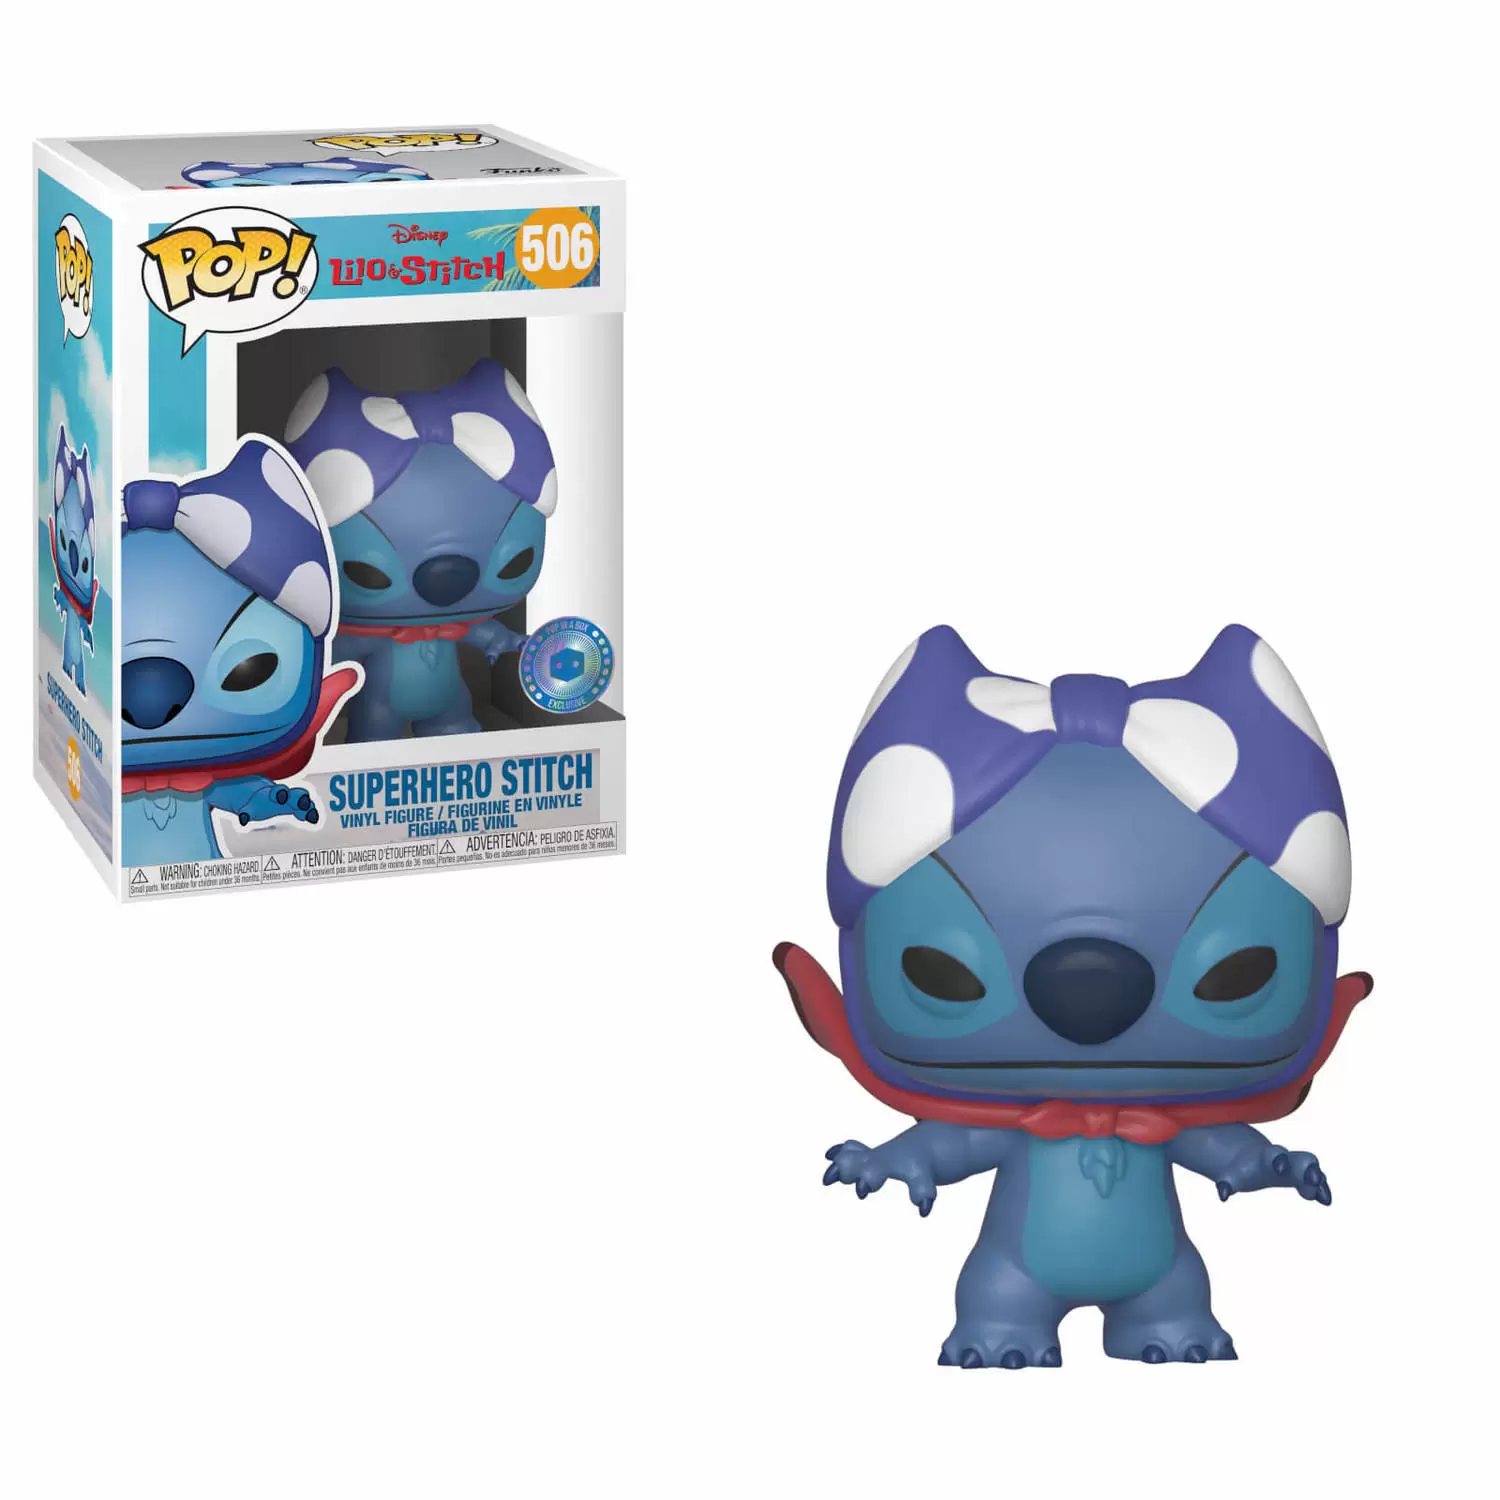 POP! Disney - Lilo & Stitch - Superhero Stitch